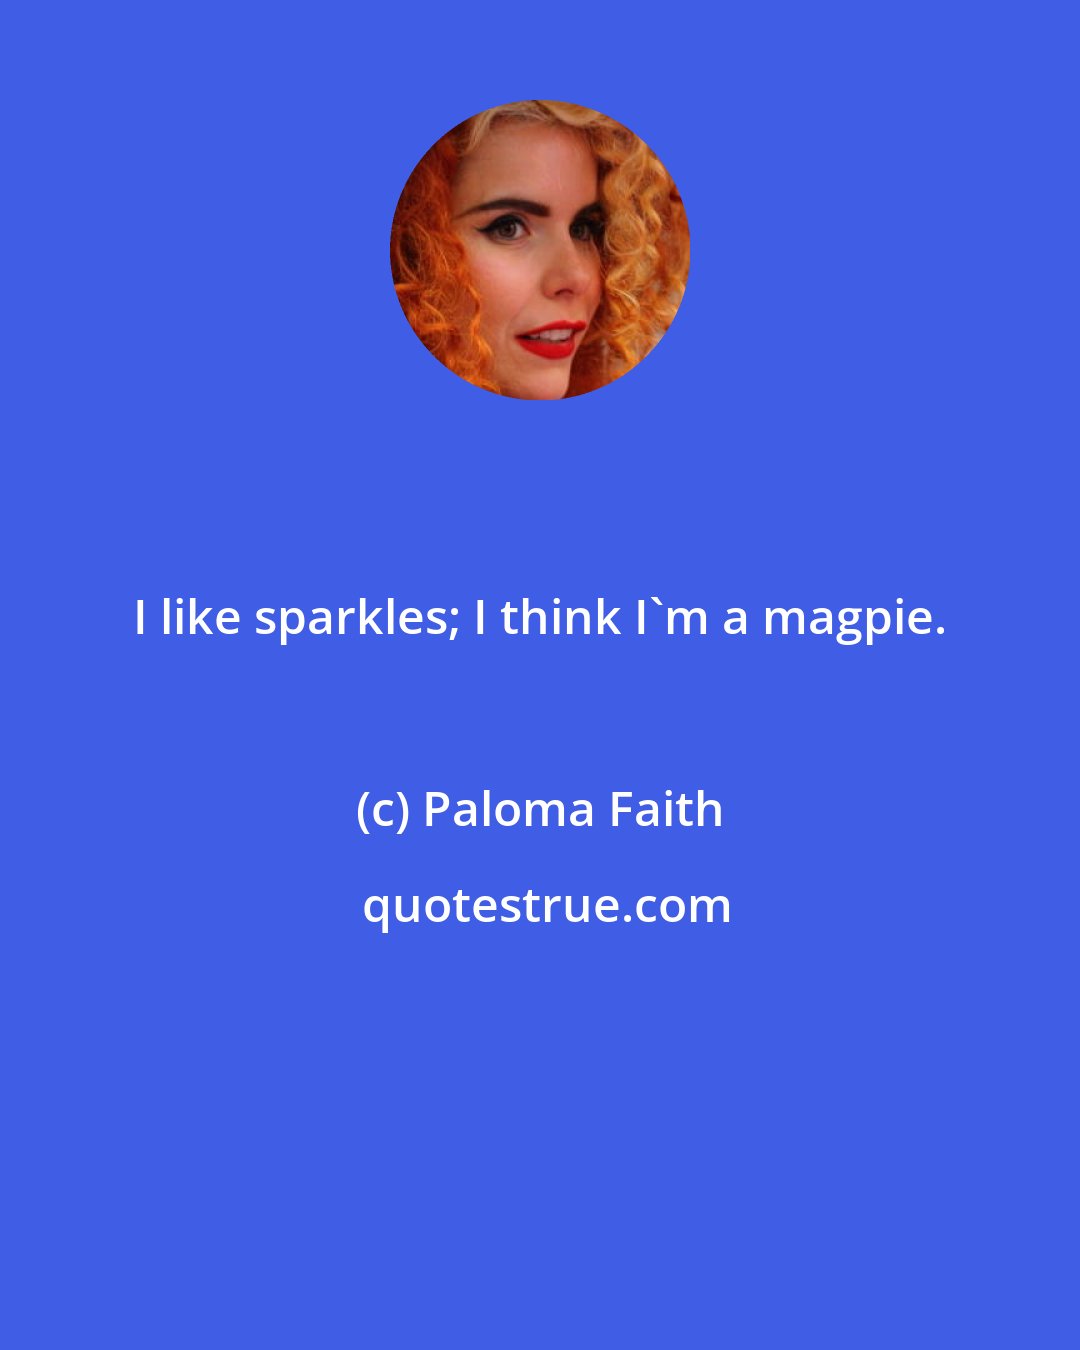 Paloma Faith: I like sparkles; I think I'm a magpie.